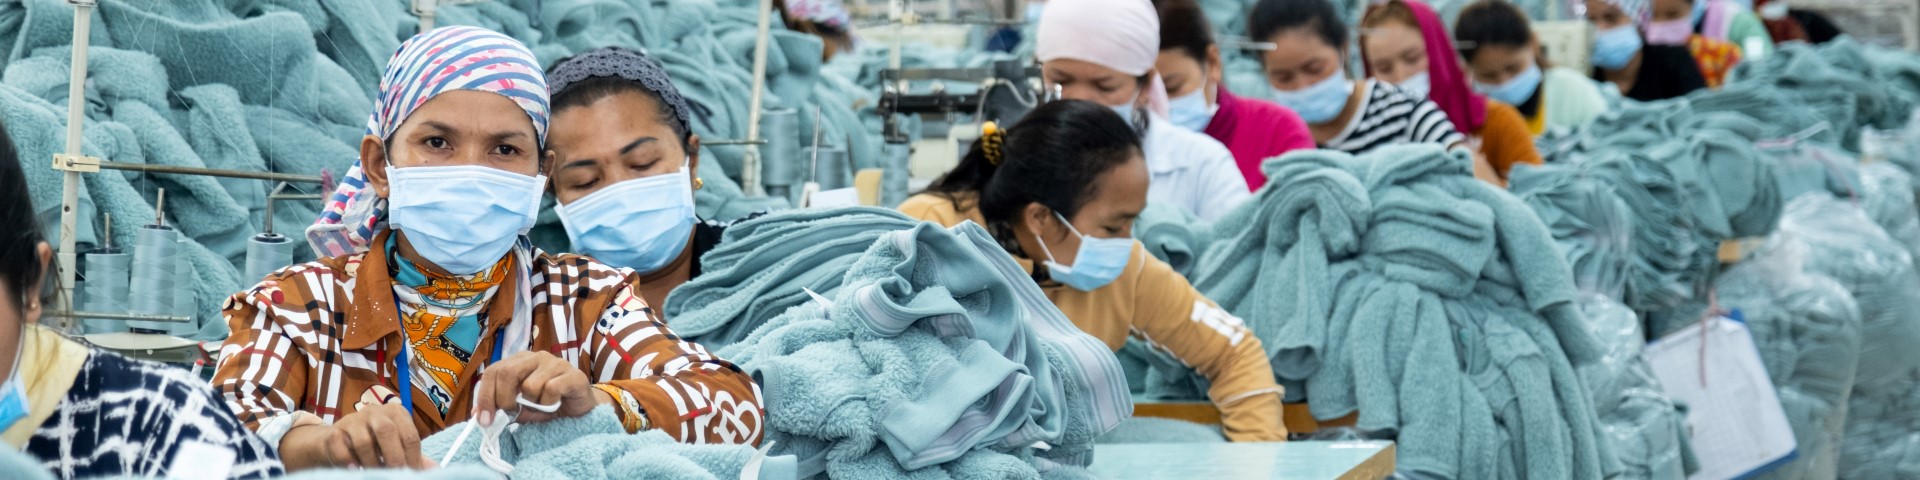 Workers sew garments in a textile factory. Copyright: GIZ/Roman König